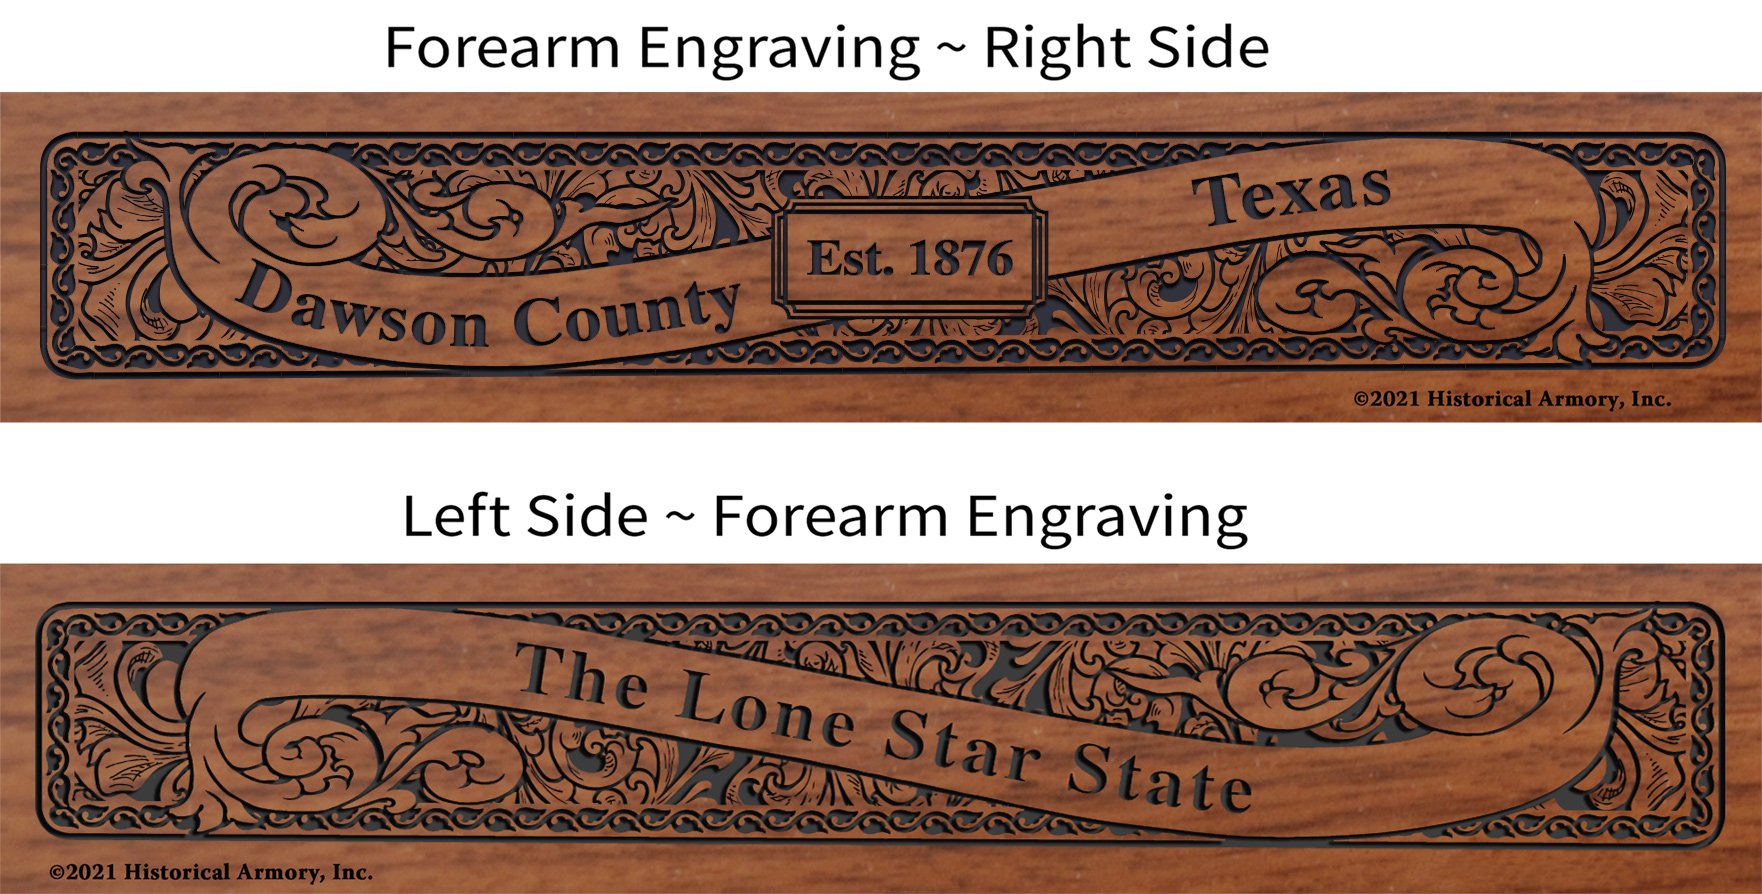 Dawson County Texas Establishment and Motto History Engraved Rifle Forearm